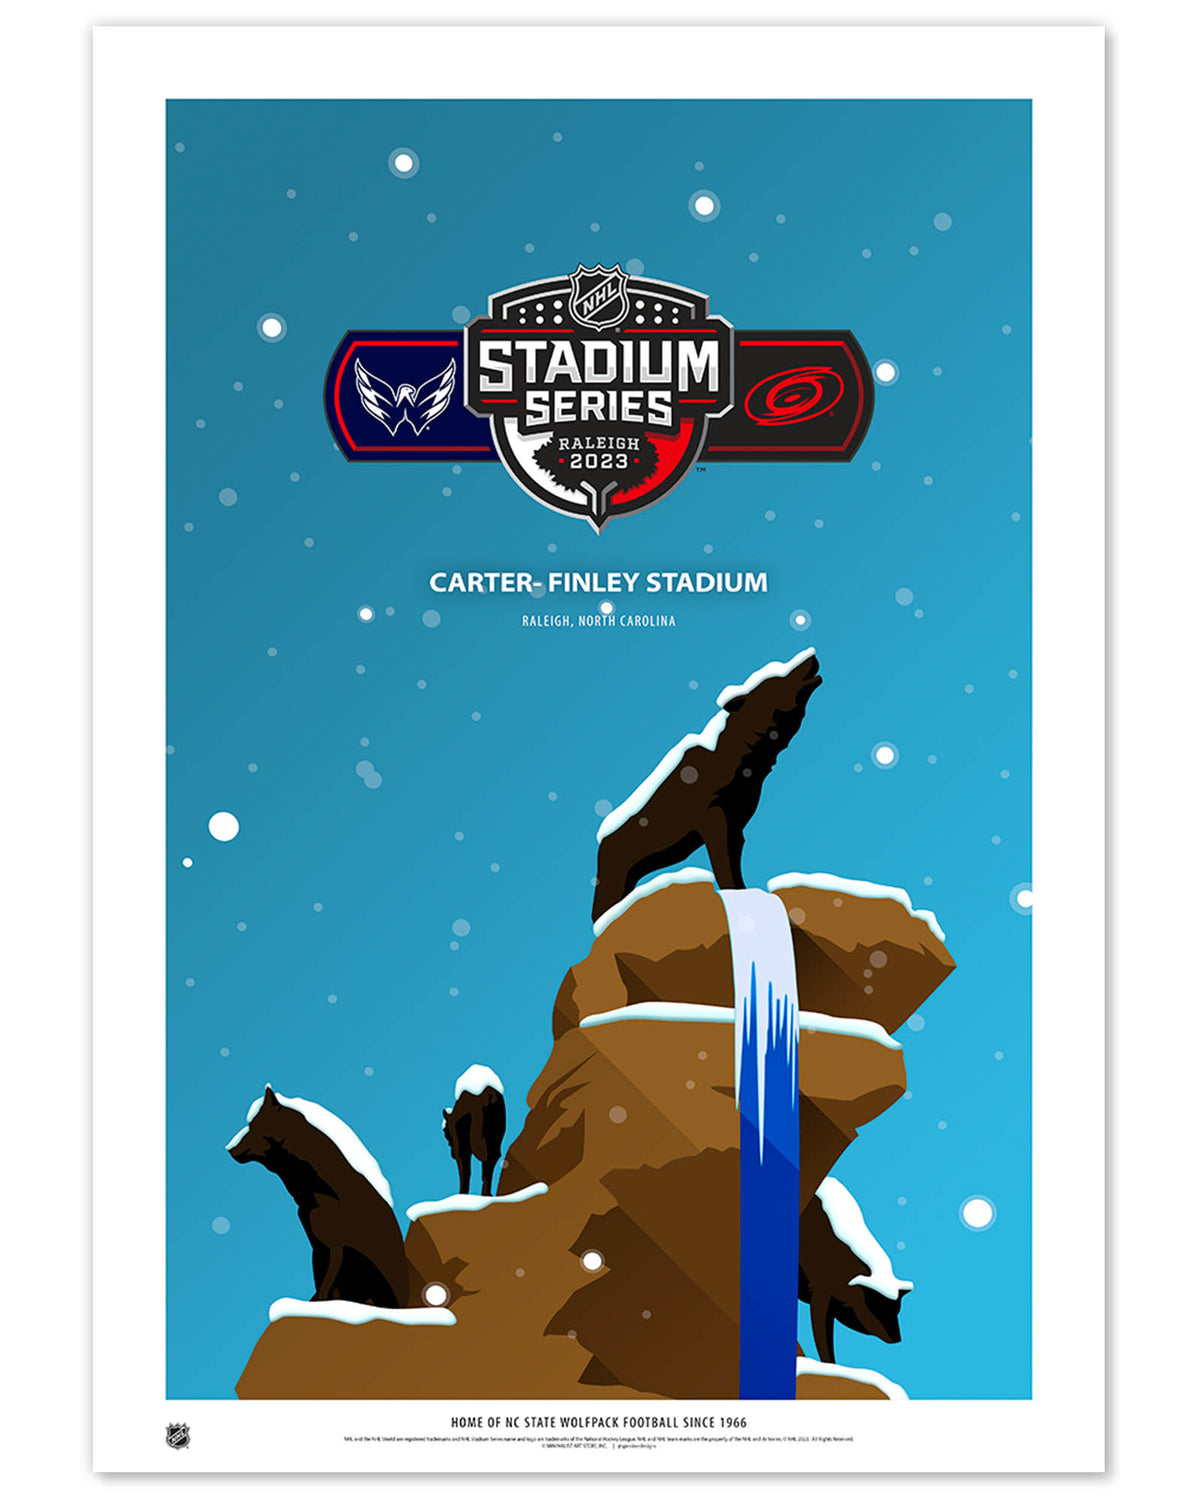 Minimalist Carter-Finley Stadium 2023 Stadium Series Limited Edition Art Prints